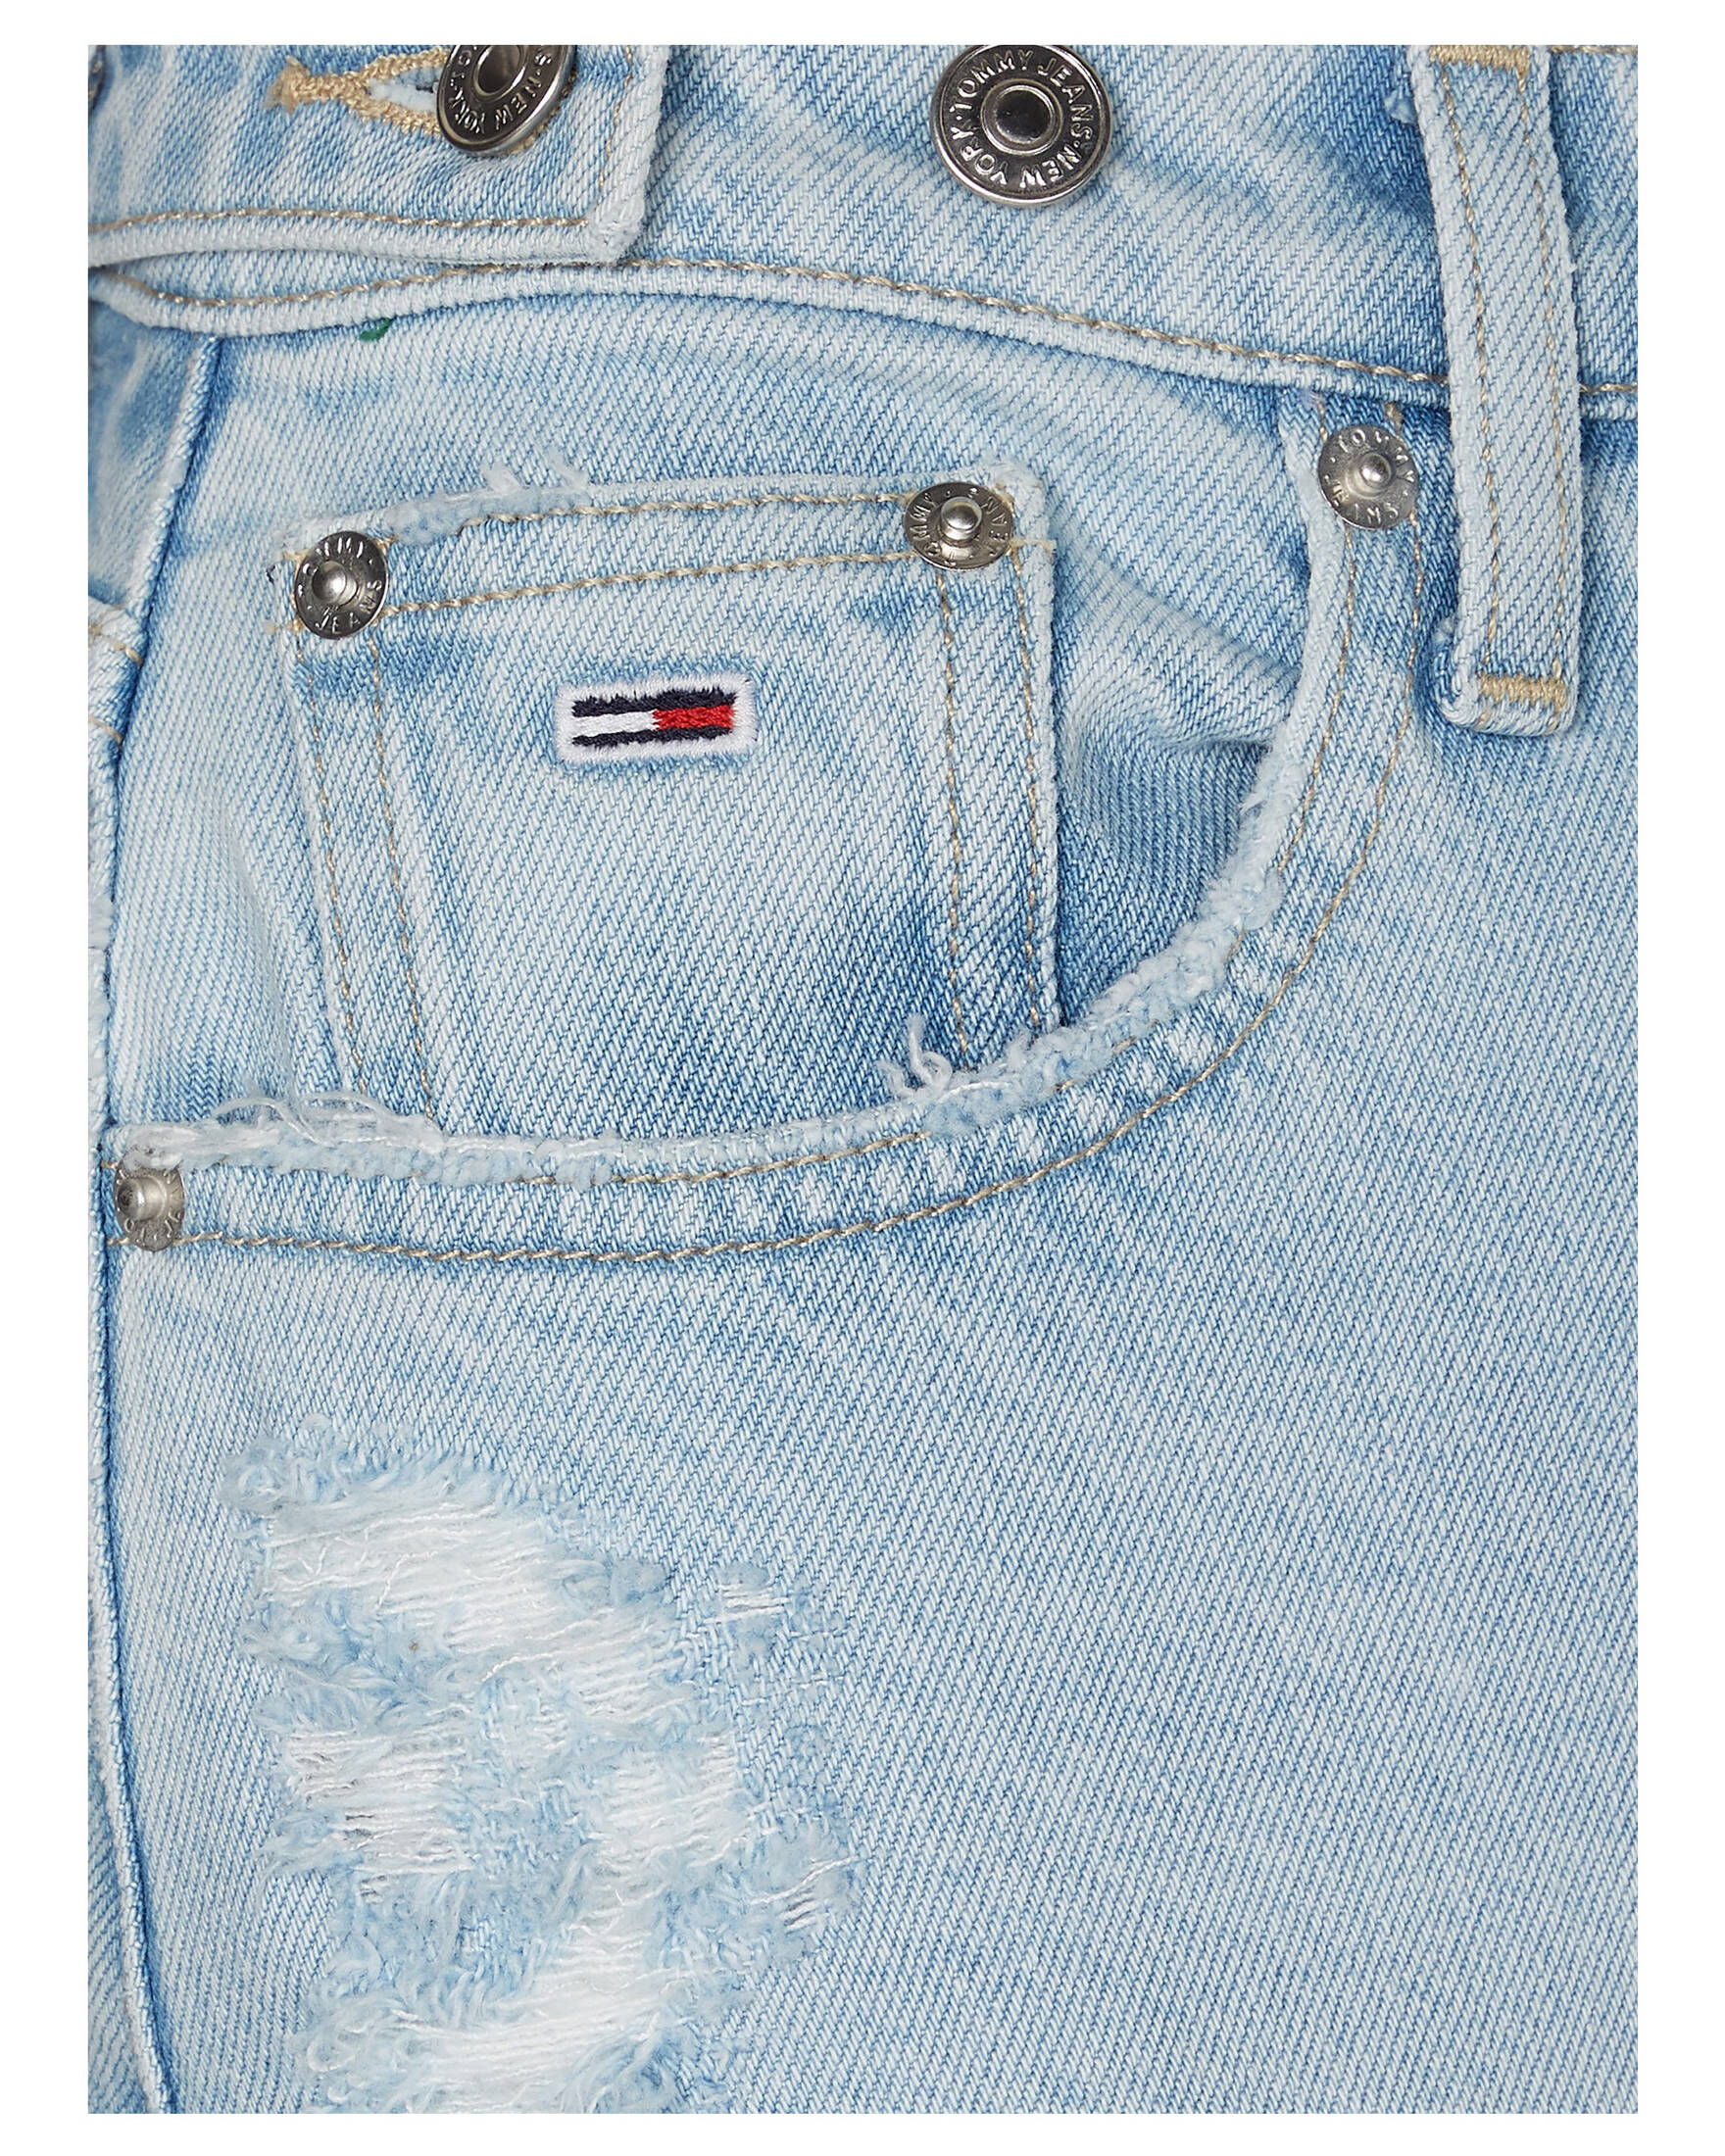 MOM | kaufen engelhorn Jeans SKIRT Jeansrock Tommy Damen